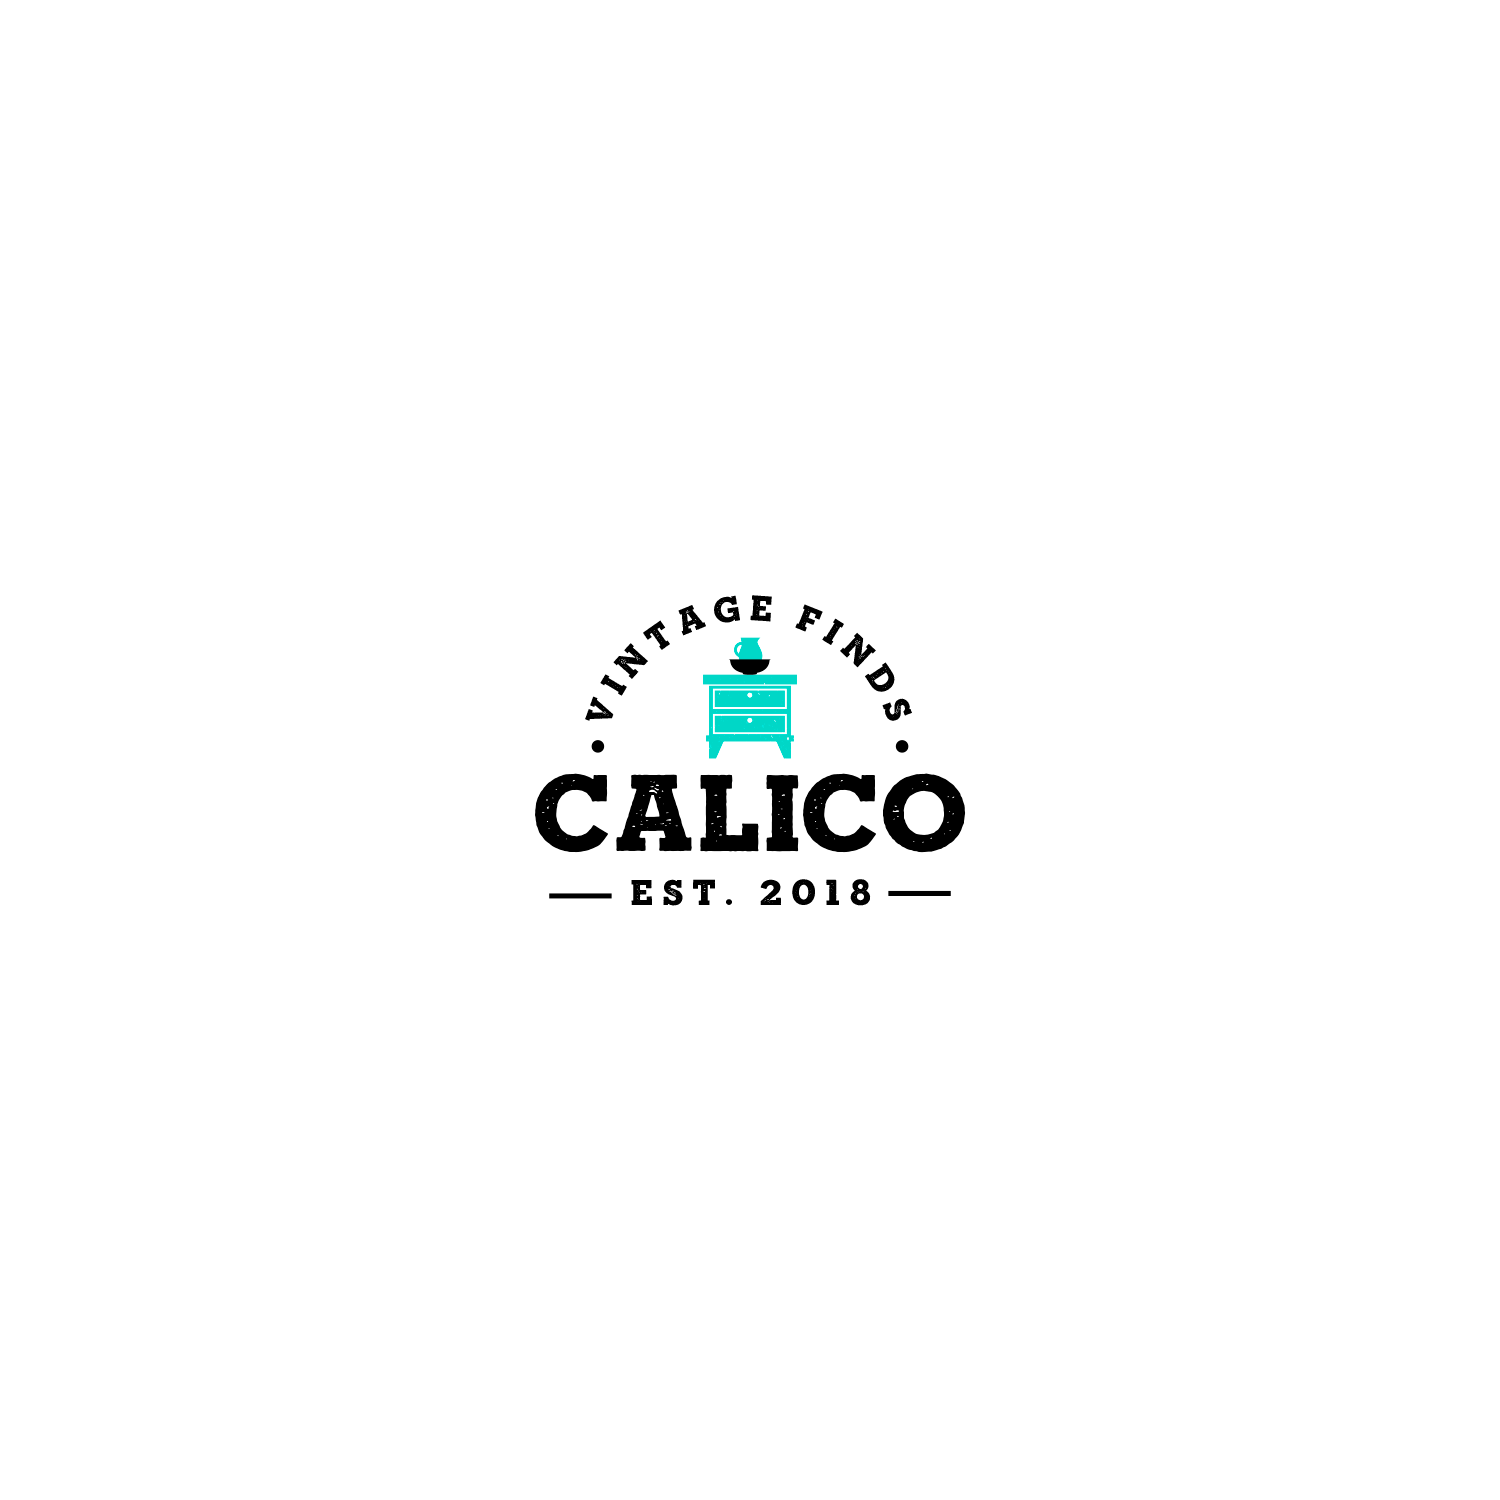 Google Calico Logo - Logo Design for Calico Vintage Finds by Felipe Moura | Design #19958890